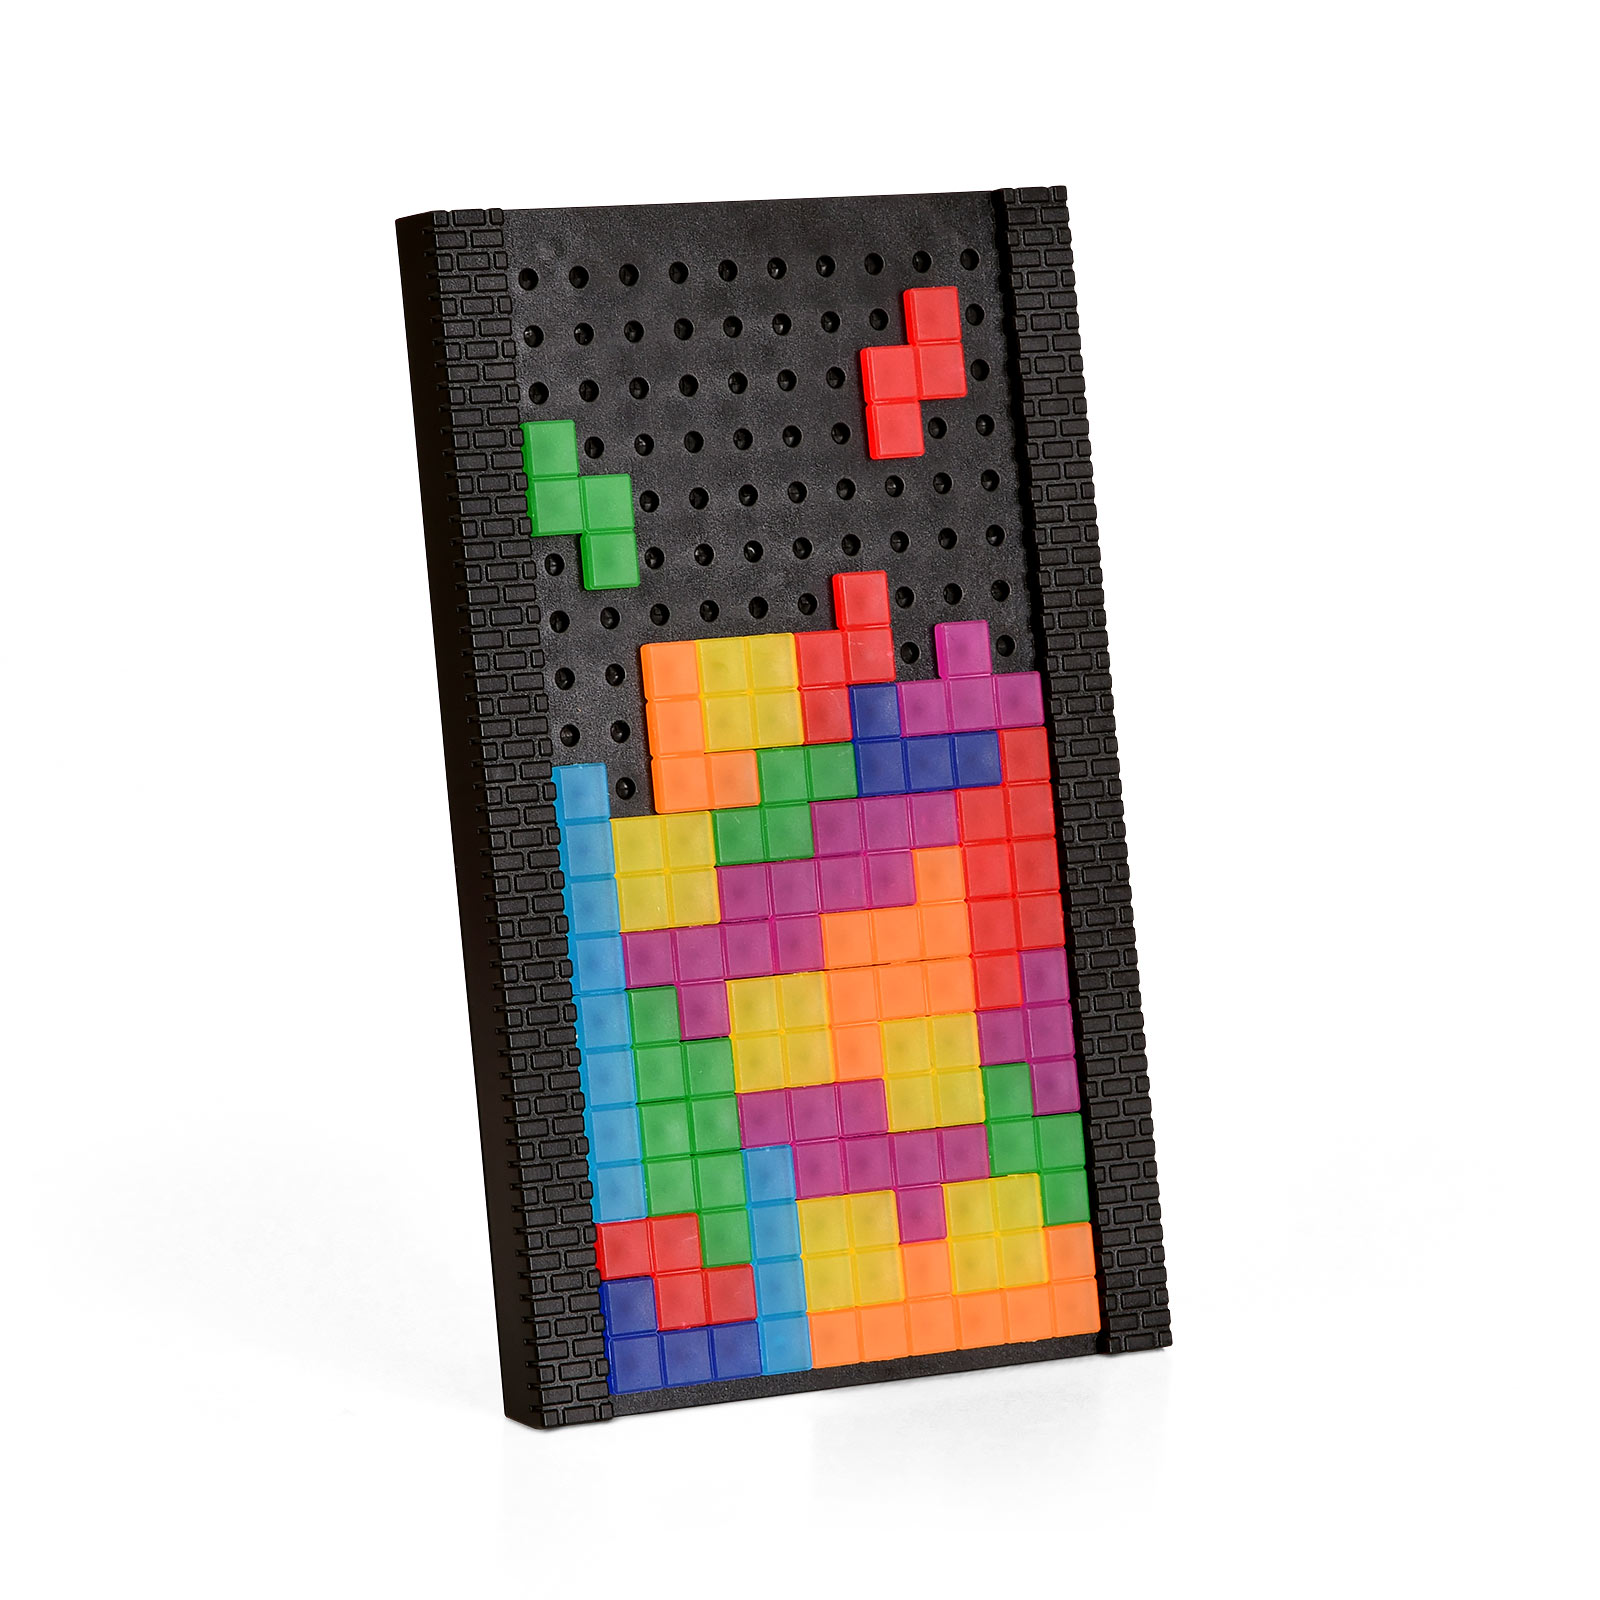 Tetris - Lampe LED Tetromino